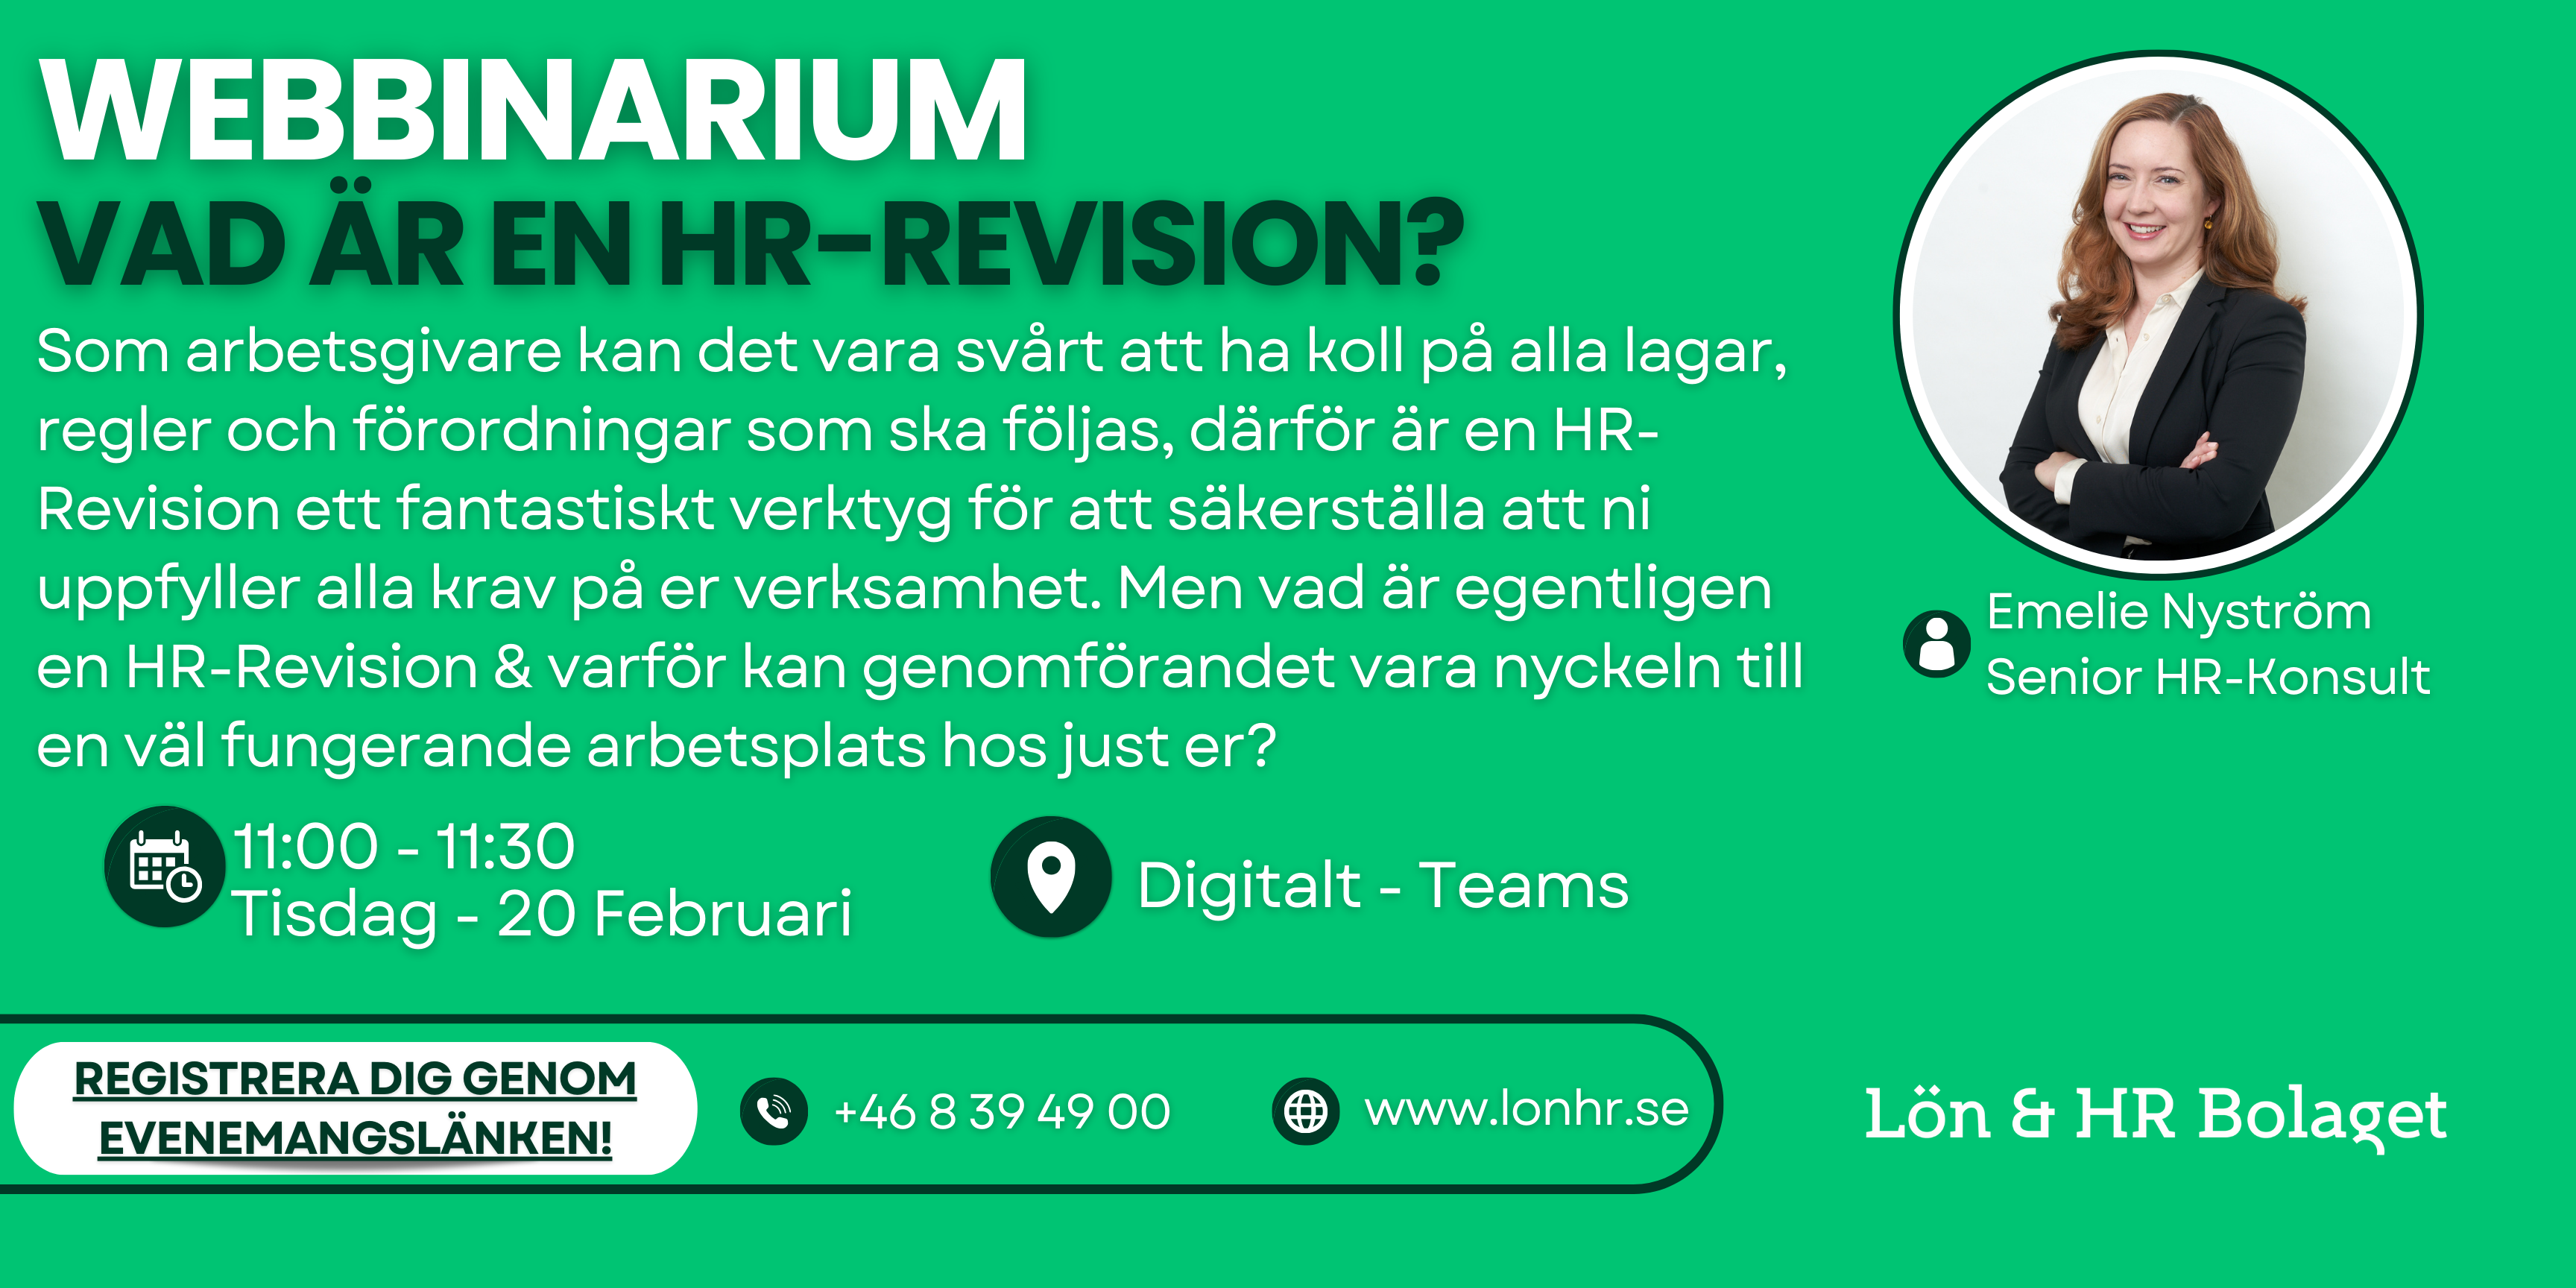 Webbinarium - HR-Revision